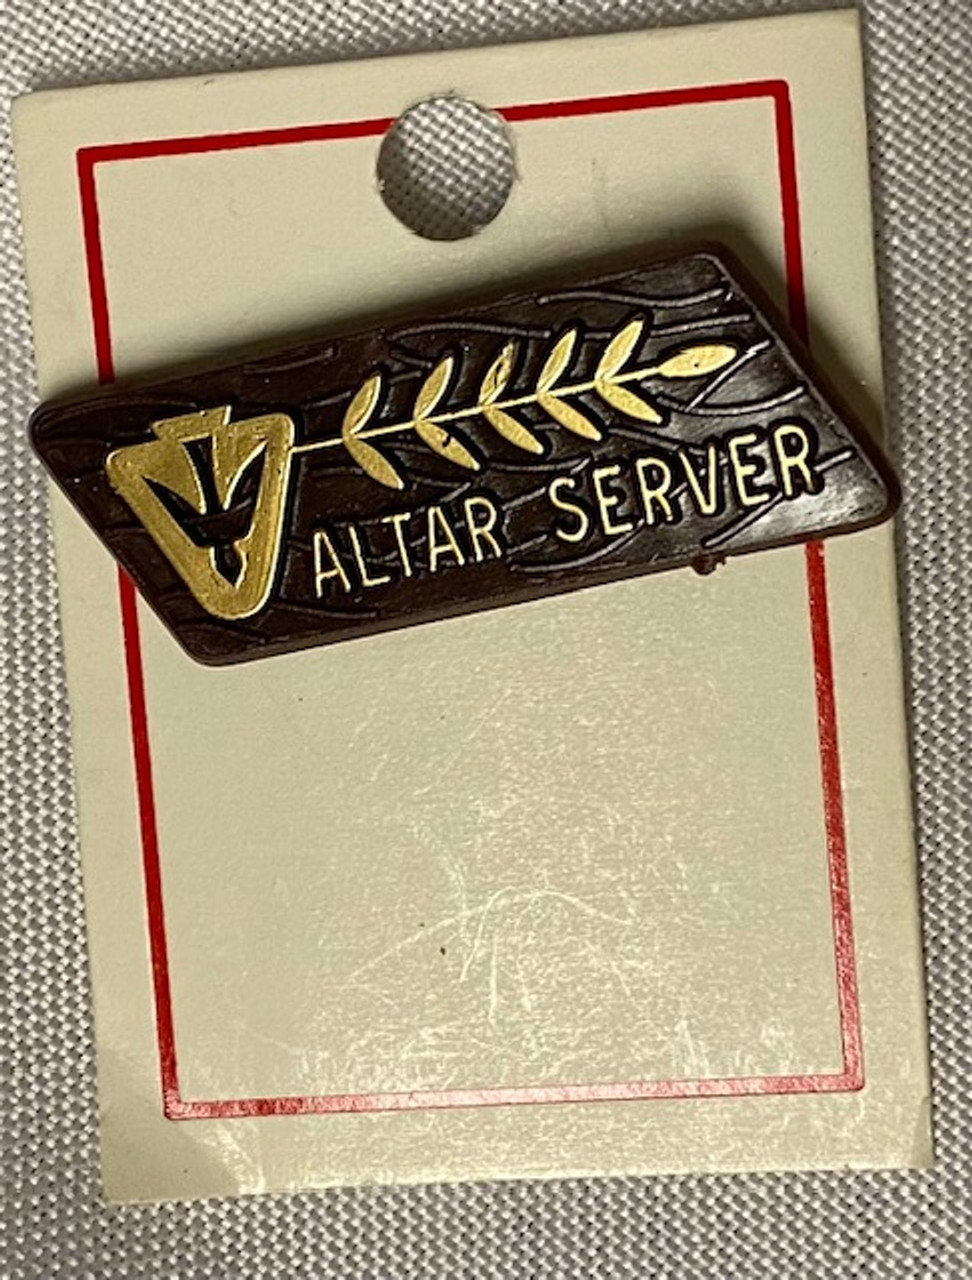 Plastic Alter Server Lapel Pin